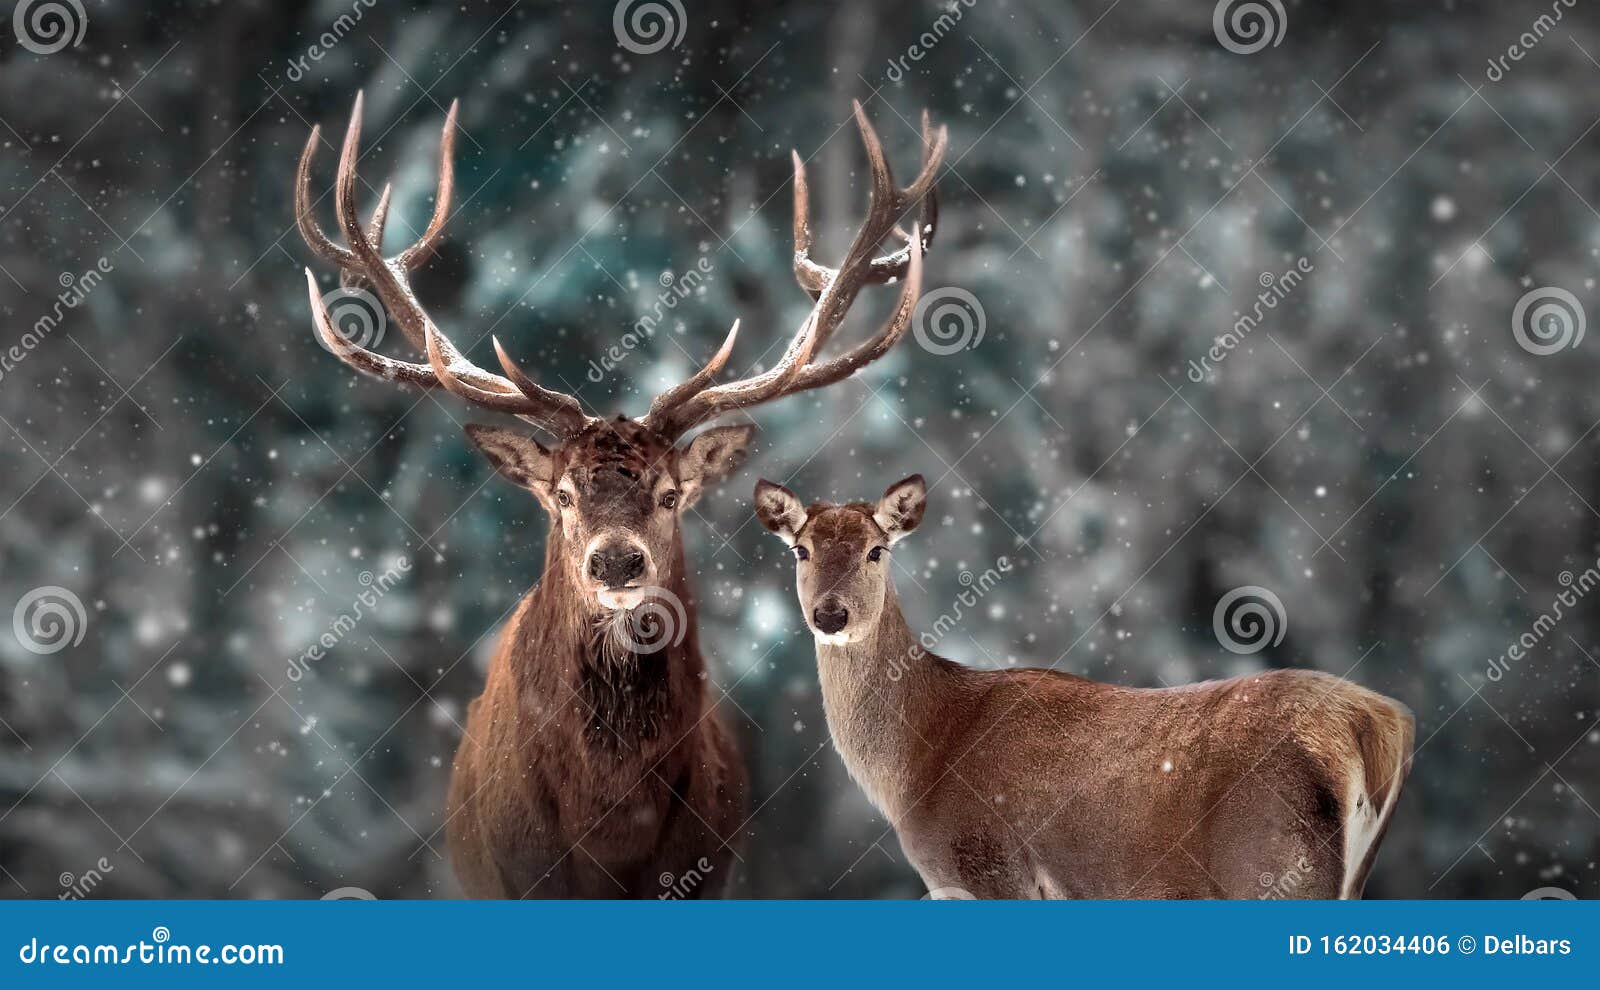 noble deer family in winter snow forest. artistic winter christmas landscape. winter wonderland.